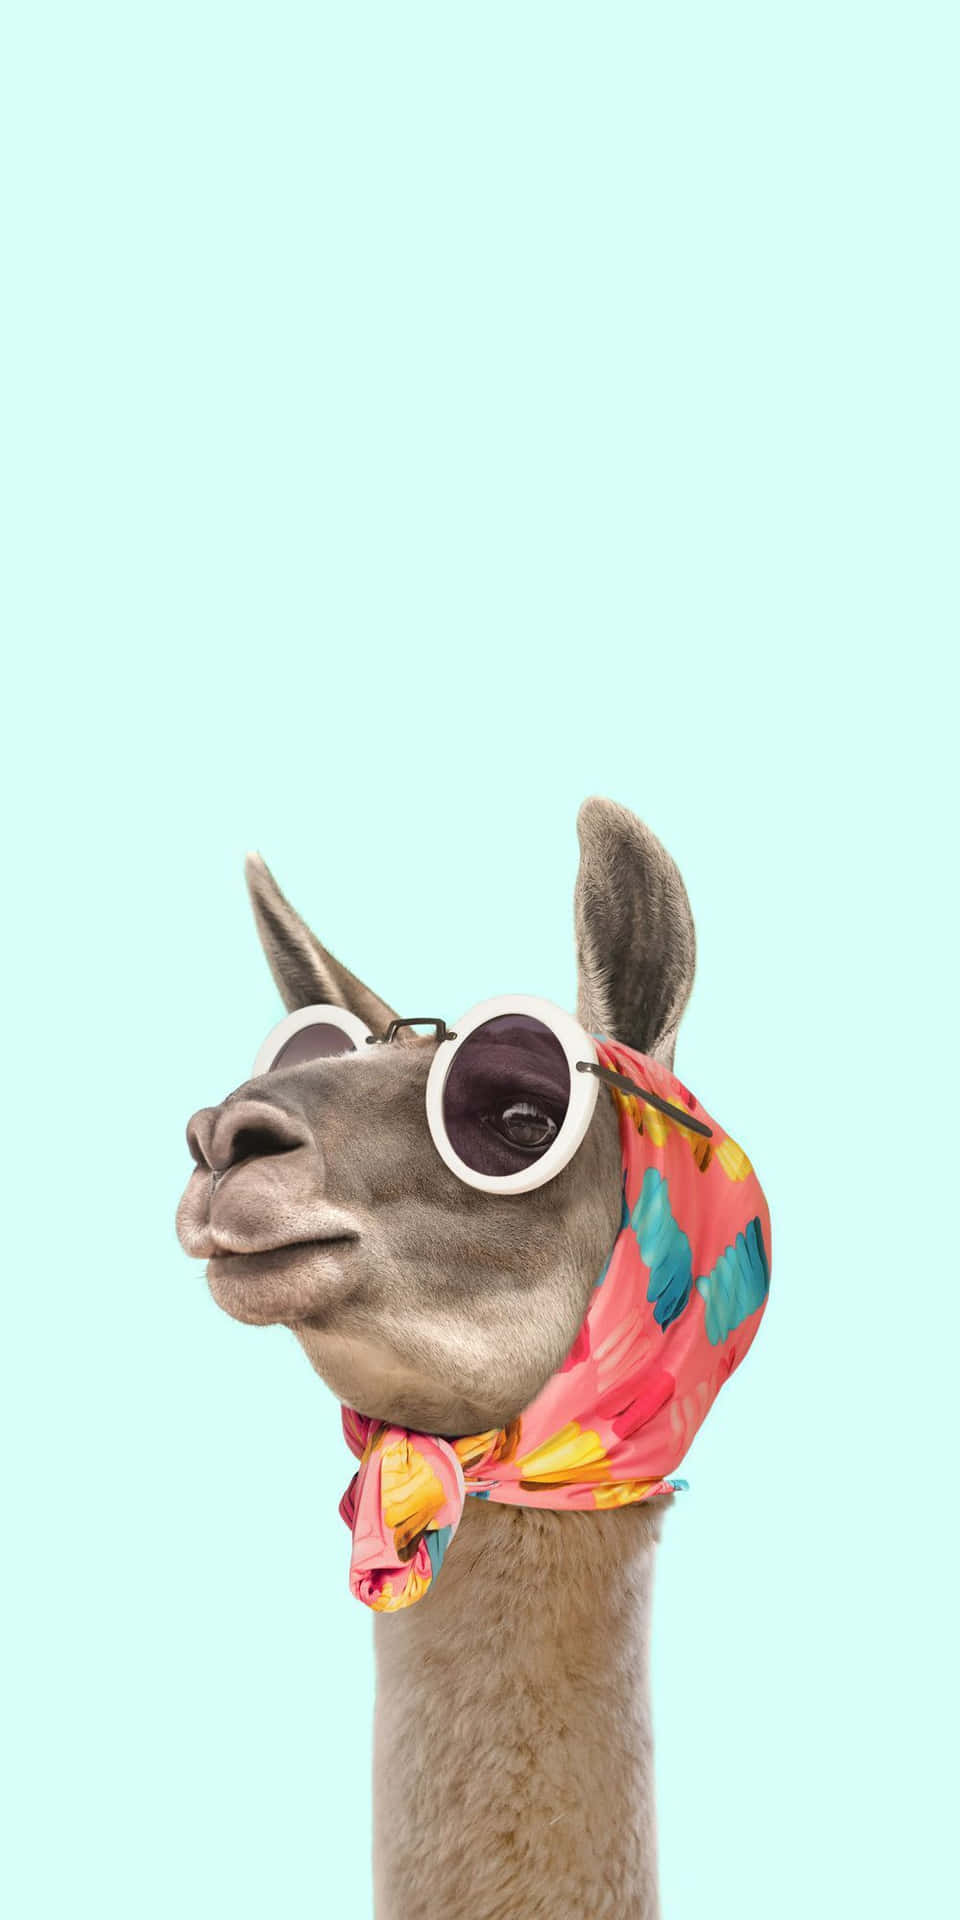 Funny Llama Fashion Style Picture